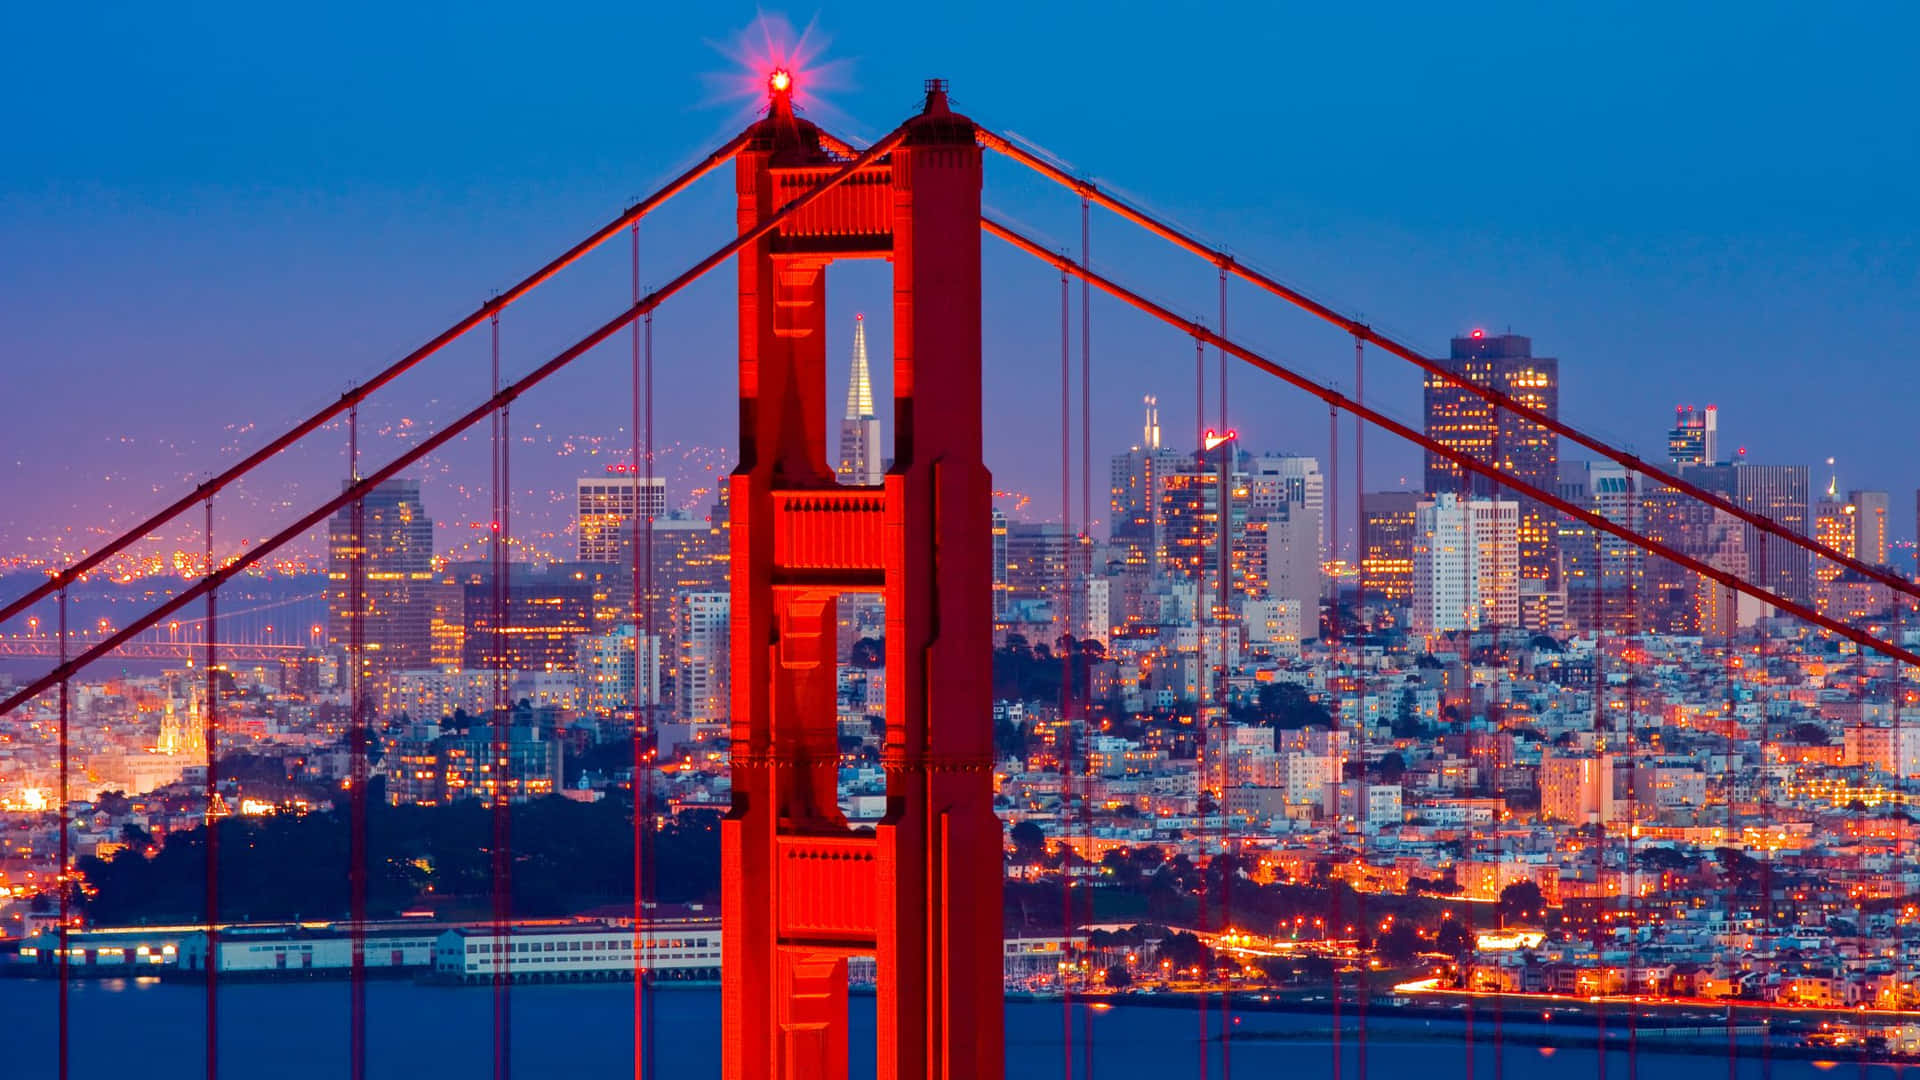 "Embrace the beauty of San Francisco"